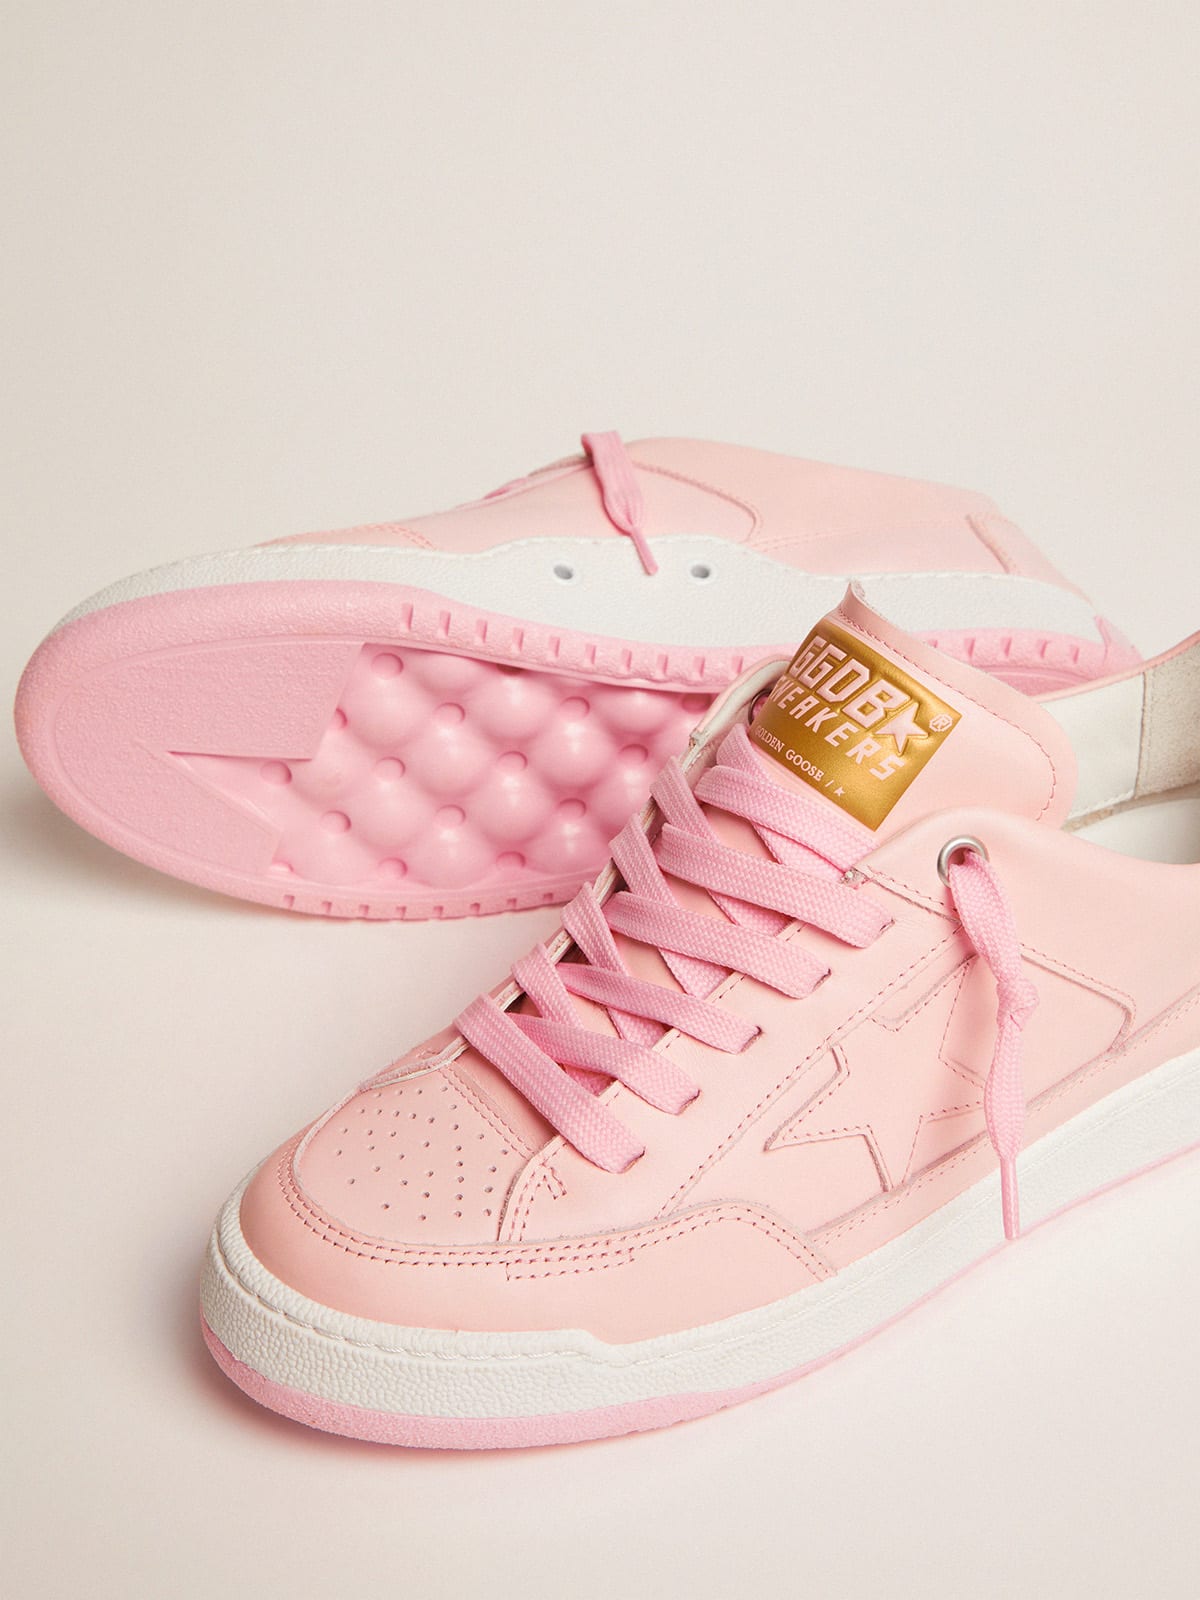 Golden Goose - Men’s Yeah sneakers in pale pink leather in 